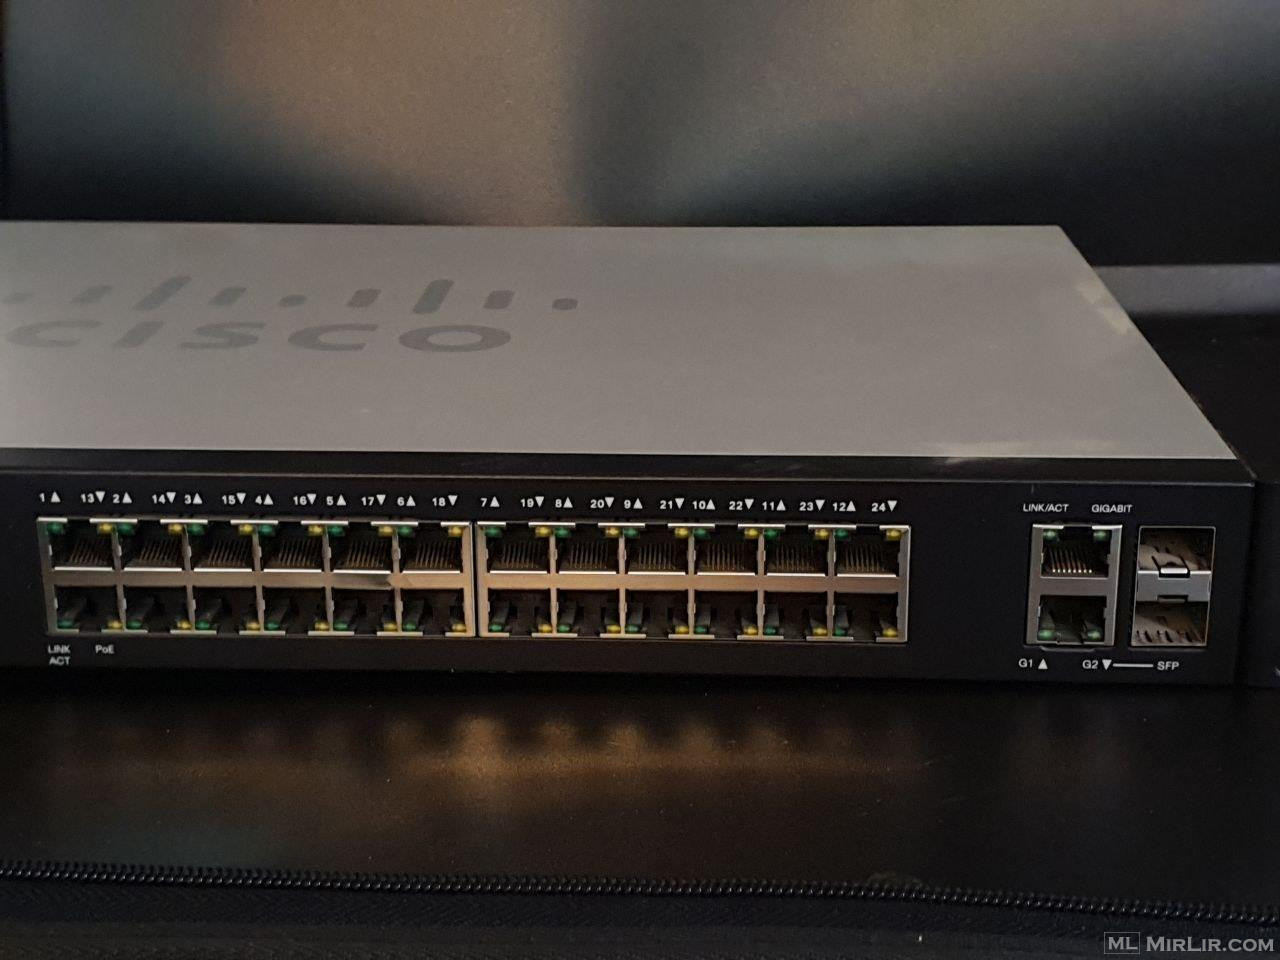  Cisco switch 24 port i ri poe